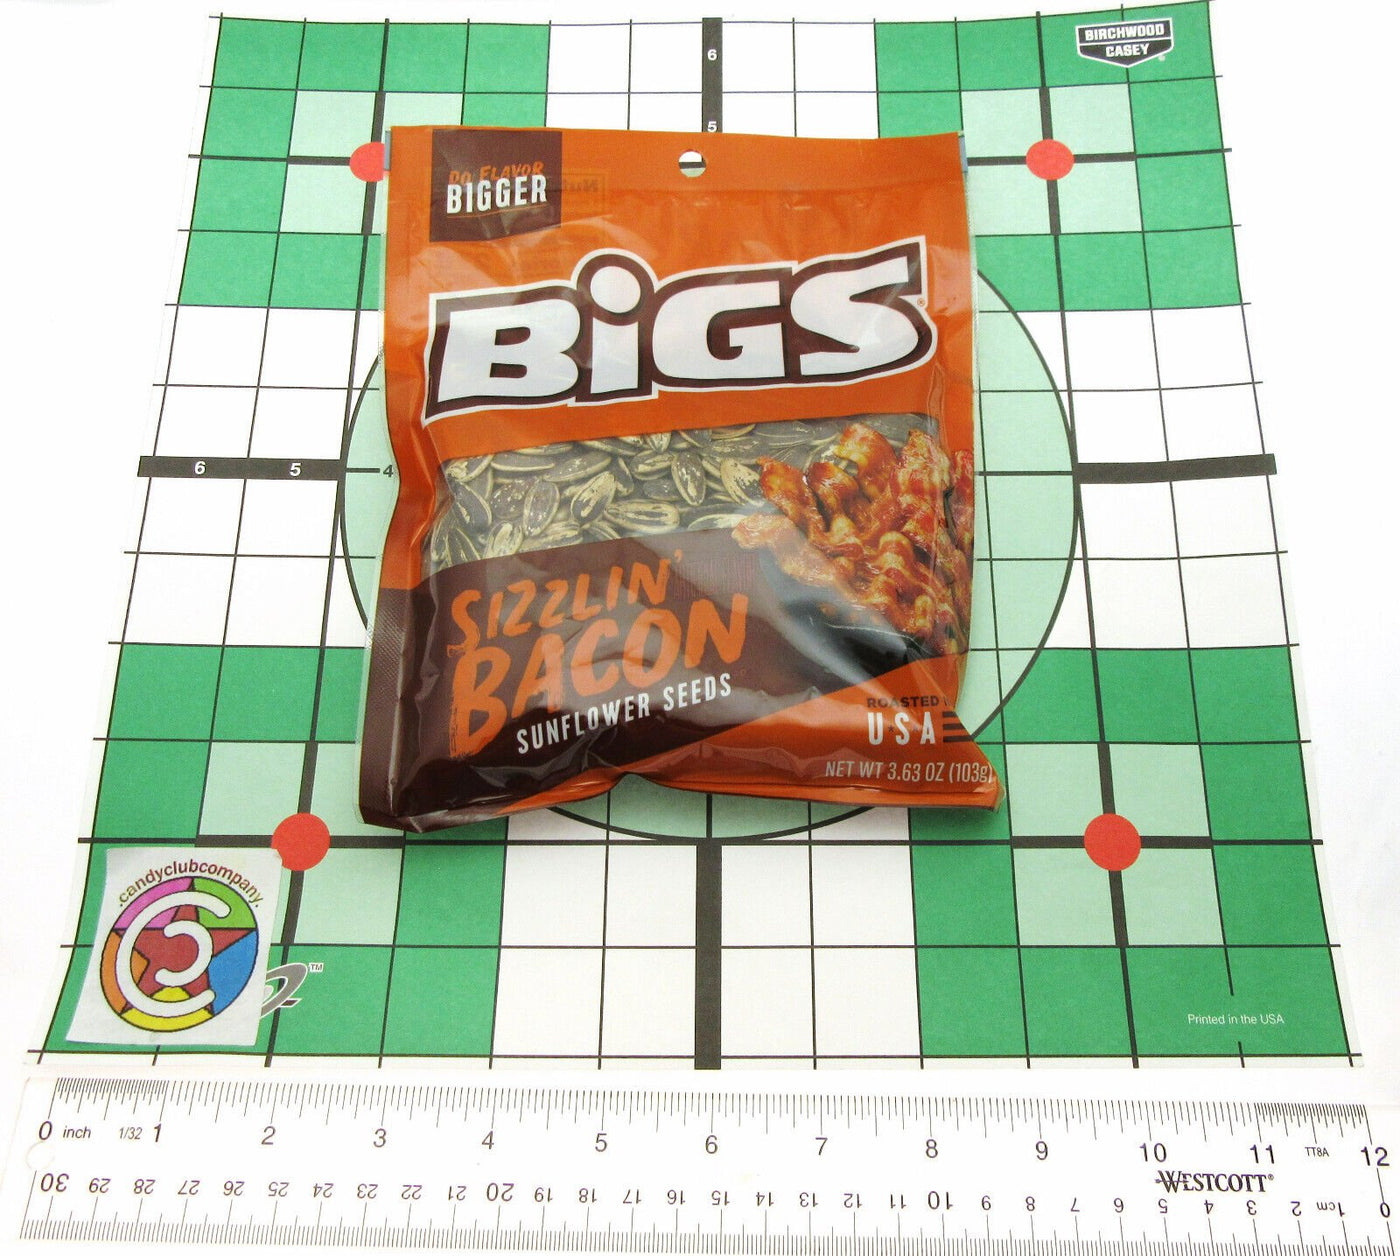 Bigs Sizzlin' Bacon Sunflower Seeds 3.63oz bag Seasoning Snack Food! ~ Lot of 2